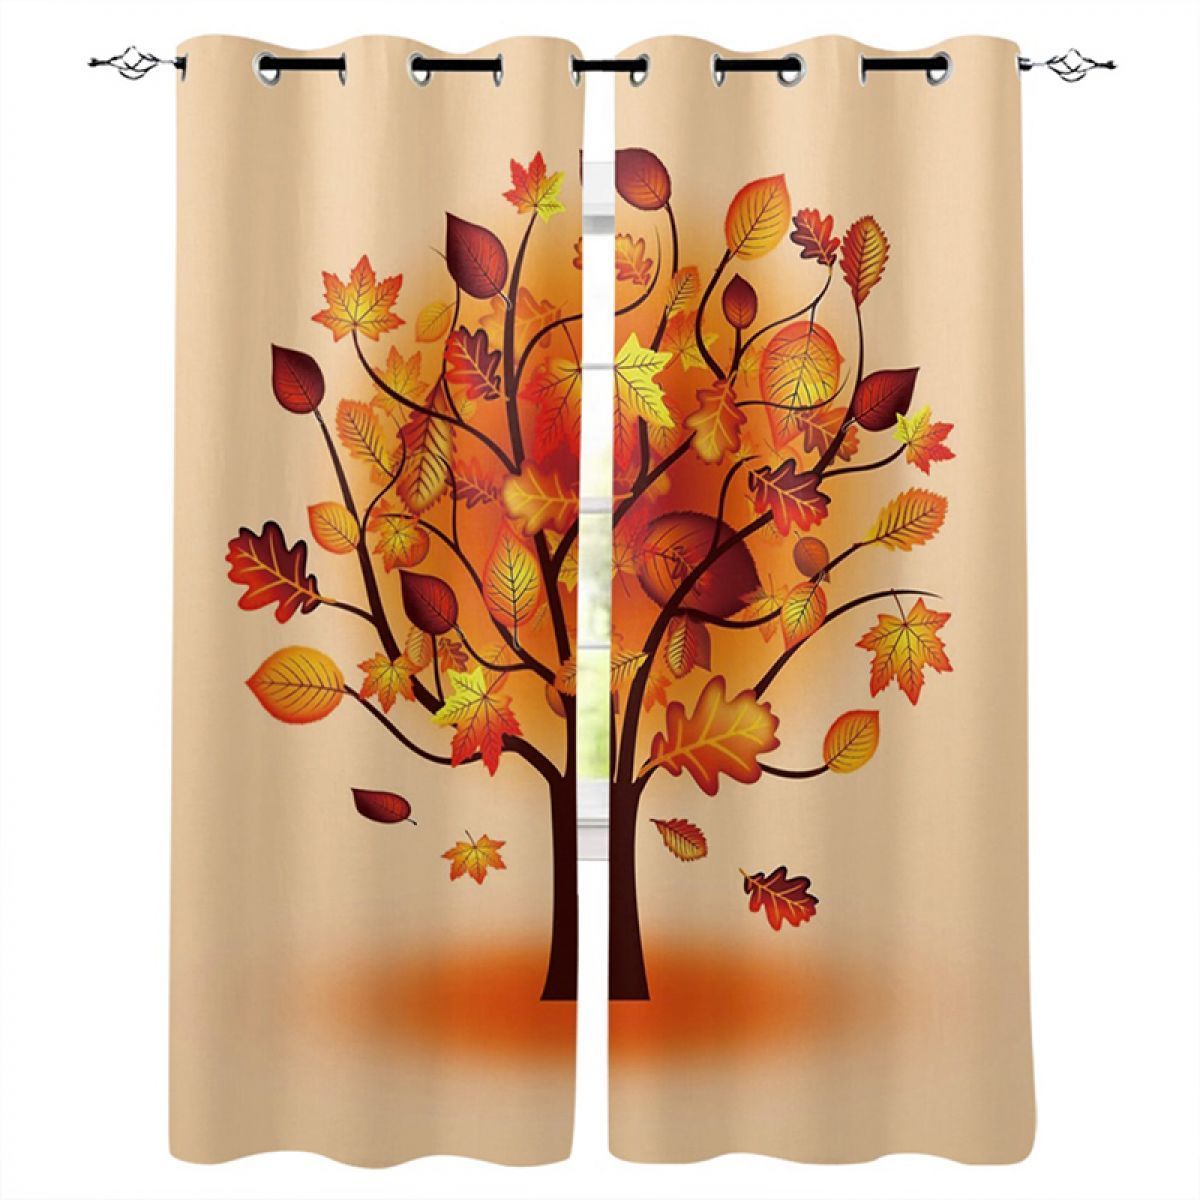 Painted Autumn Tree Printed Window Curtain Home Decor